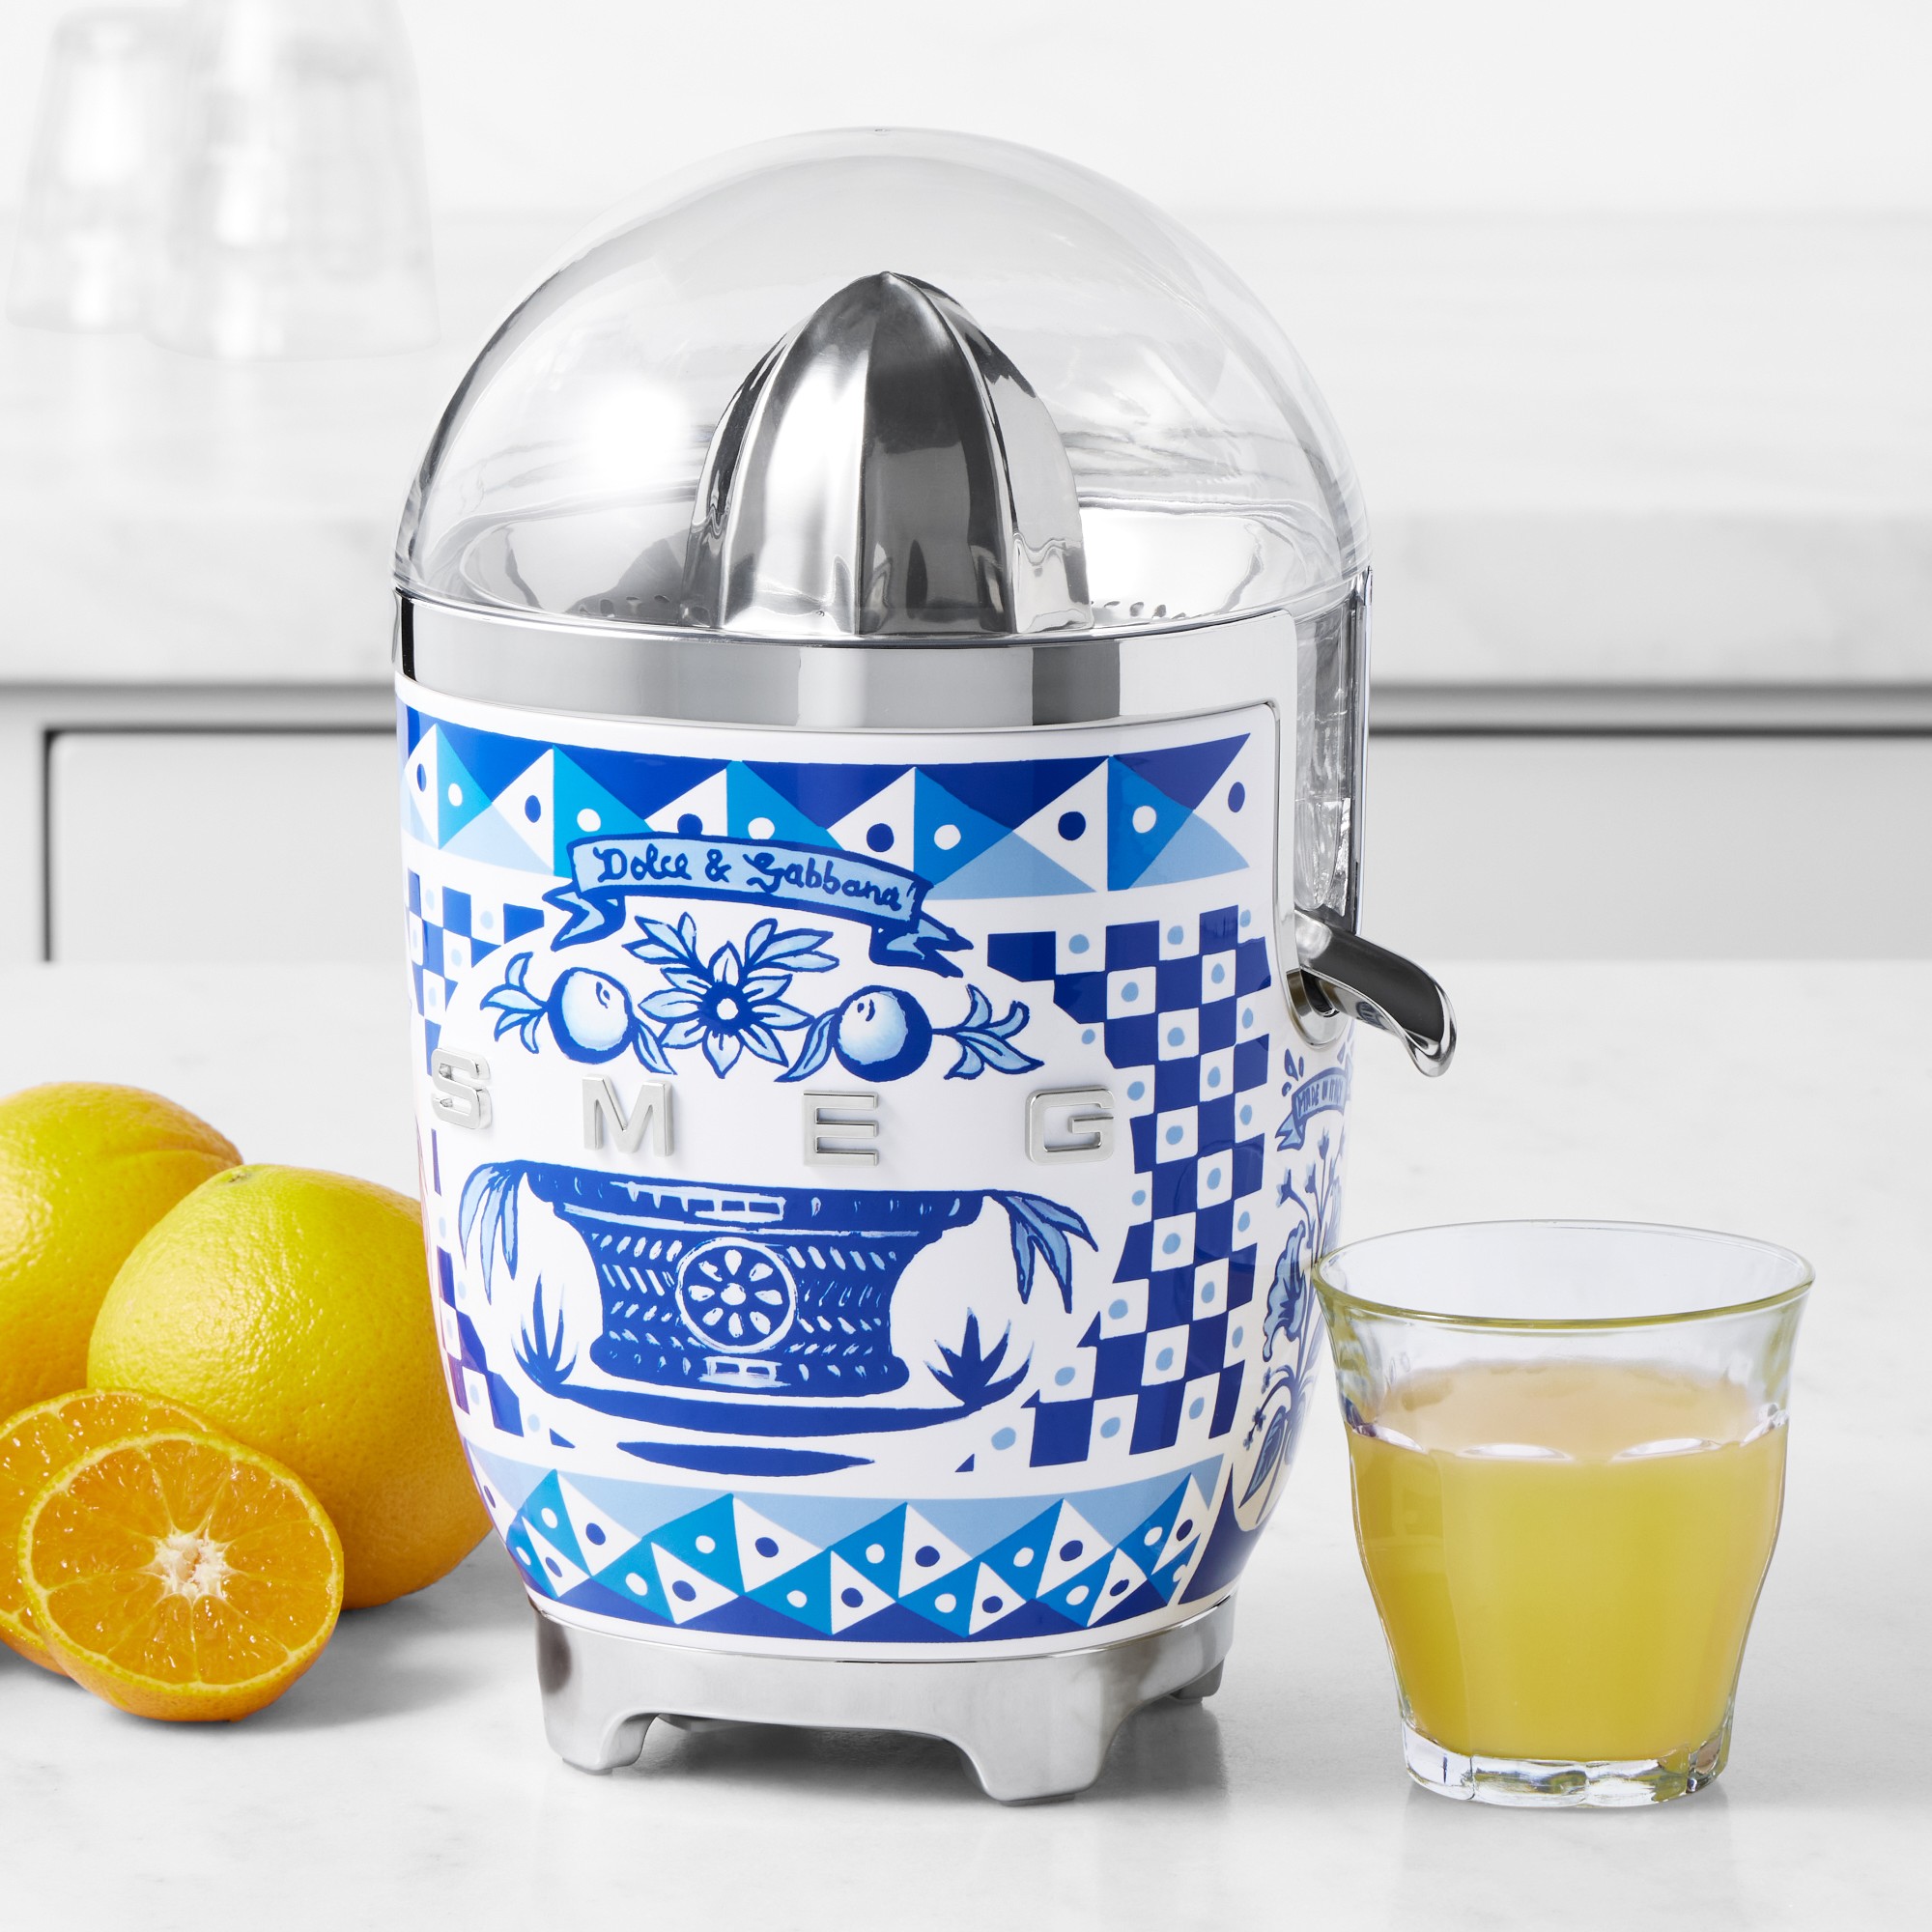 SMEG Dolce & Gabbana Citrus Juicer, Blu Mediterraneo